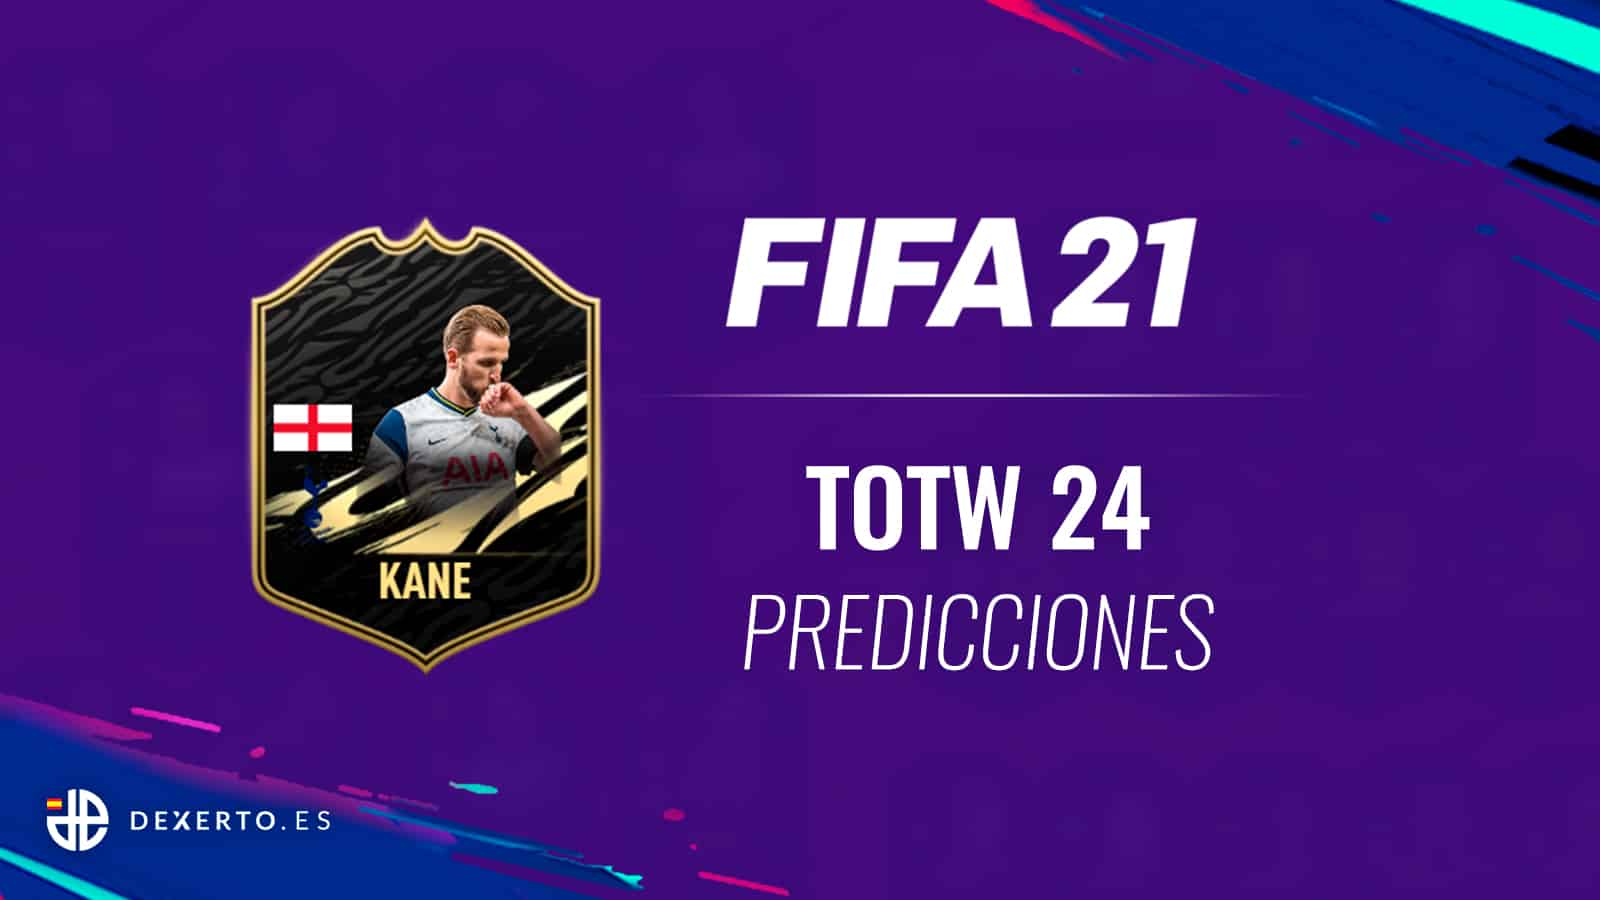 KANE predicciones FIFA 21 TOTW 24